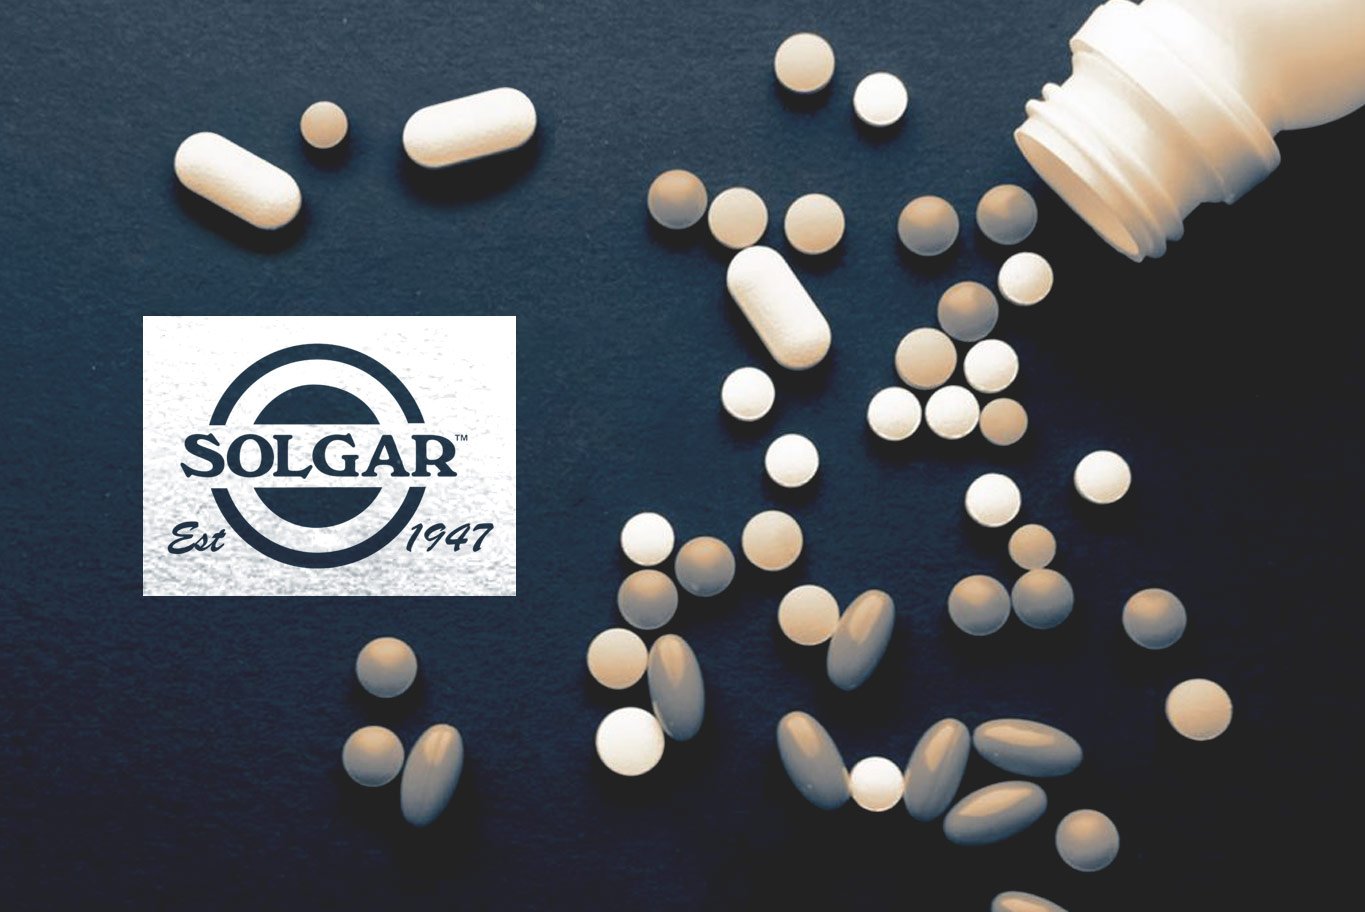 solgar supplements logo banner optimus medica